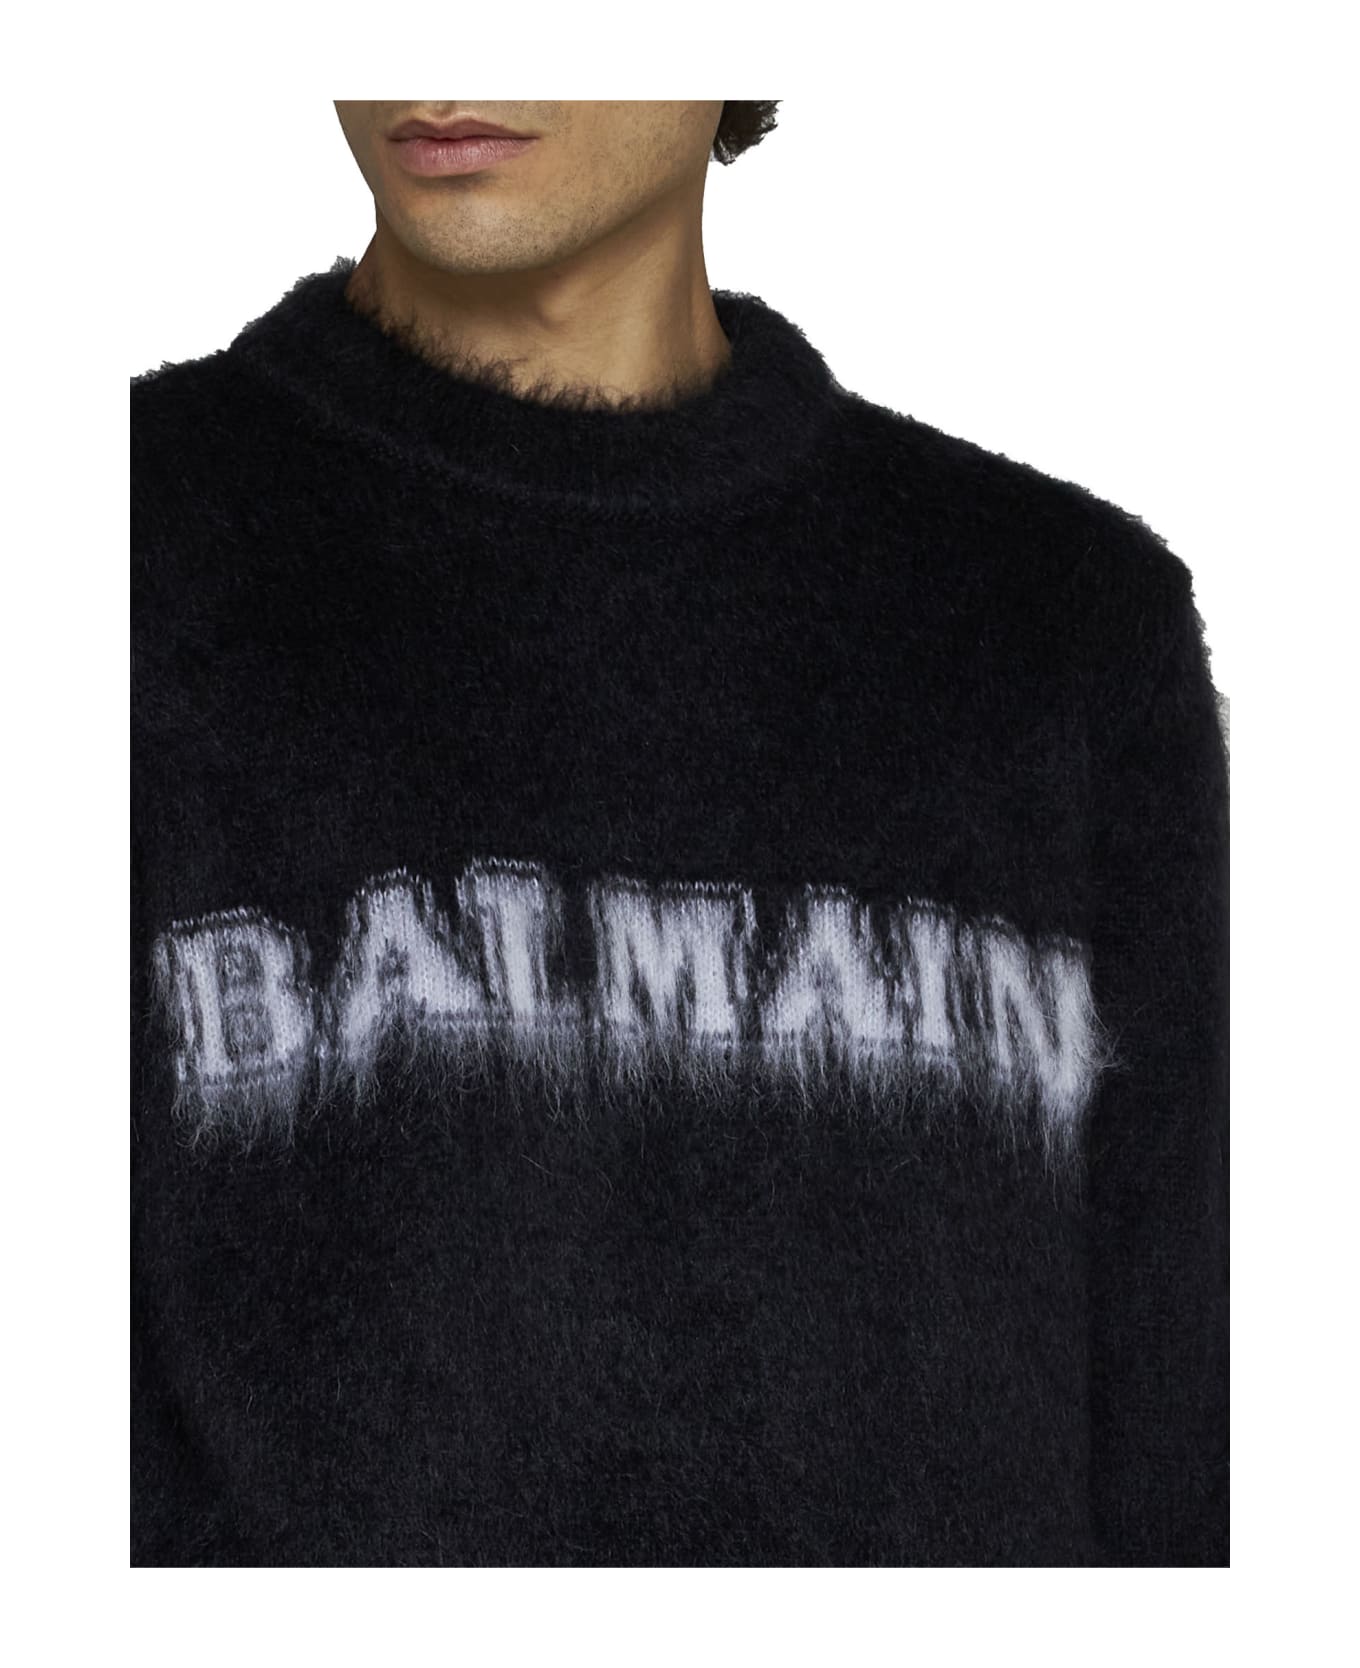 Balmain ' Retr Weater - Eab Noir Blanc フリース